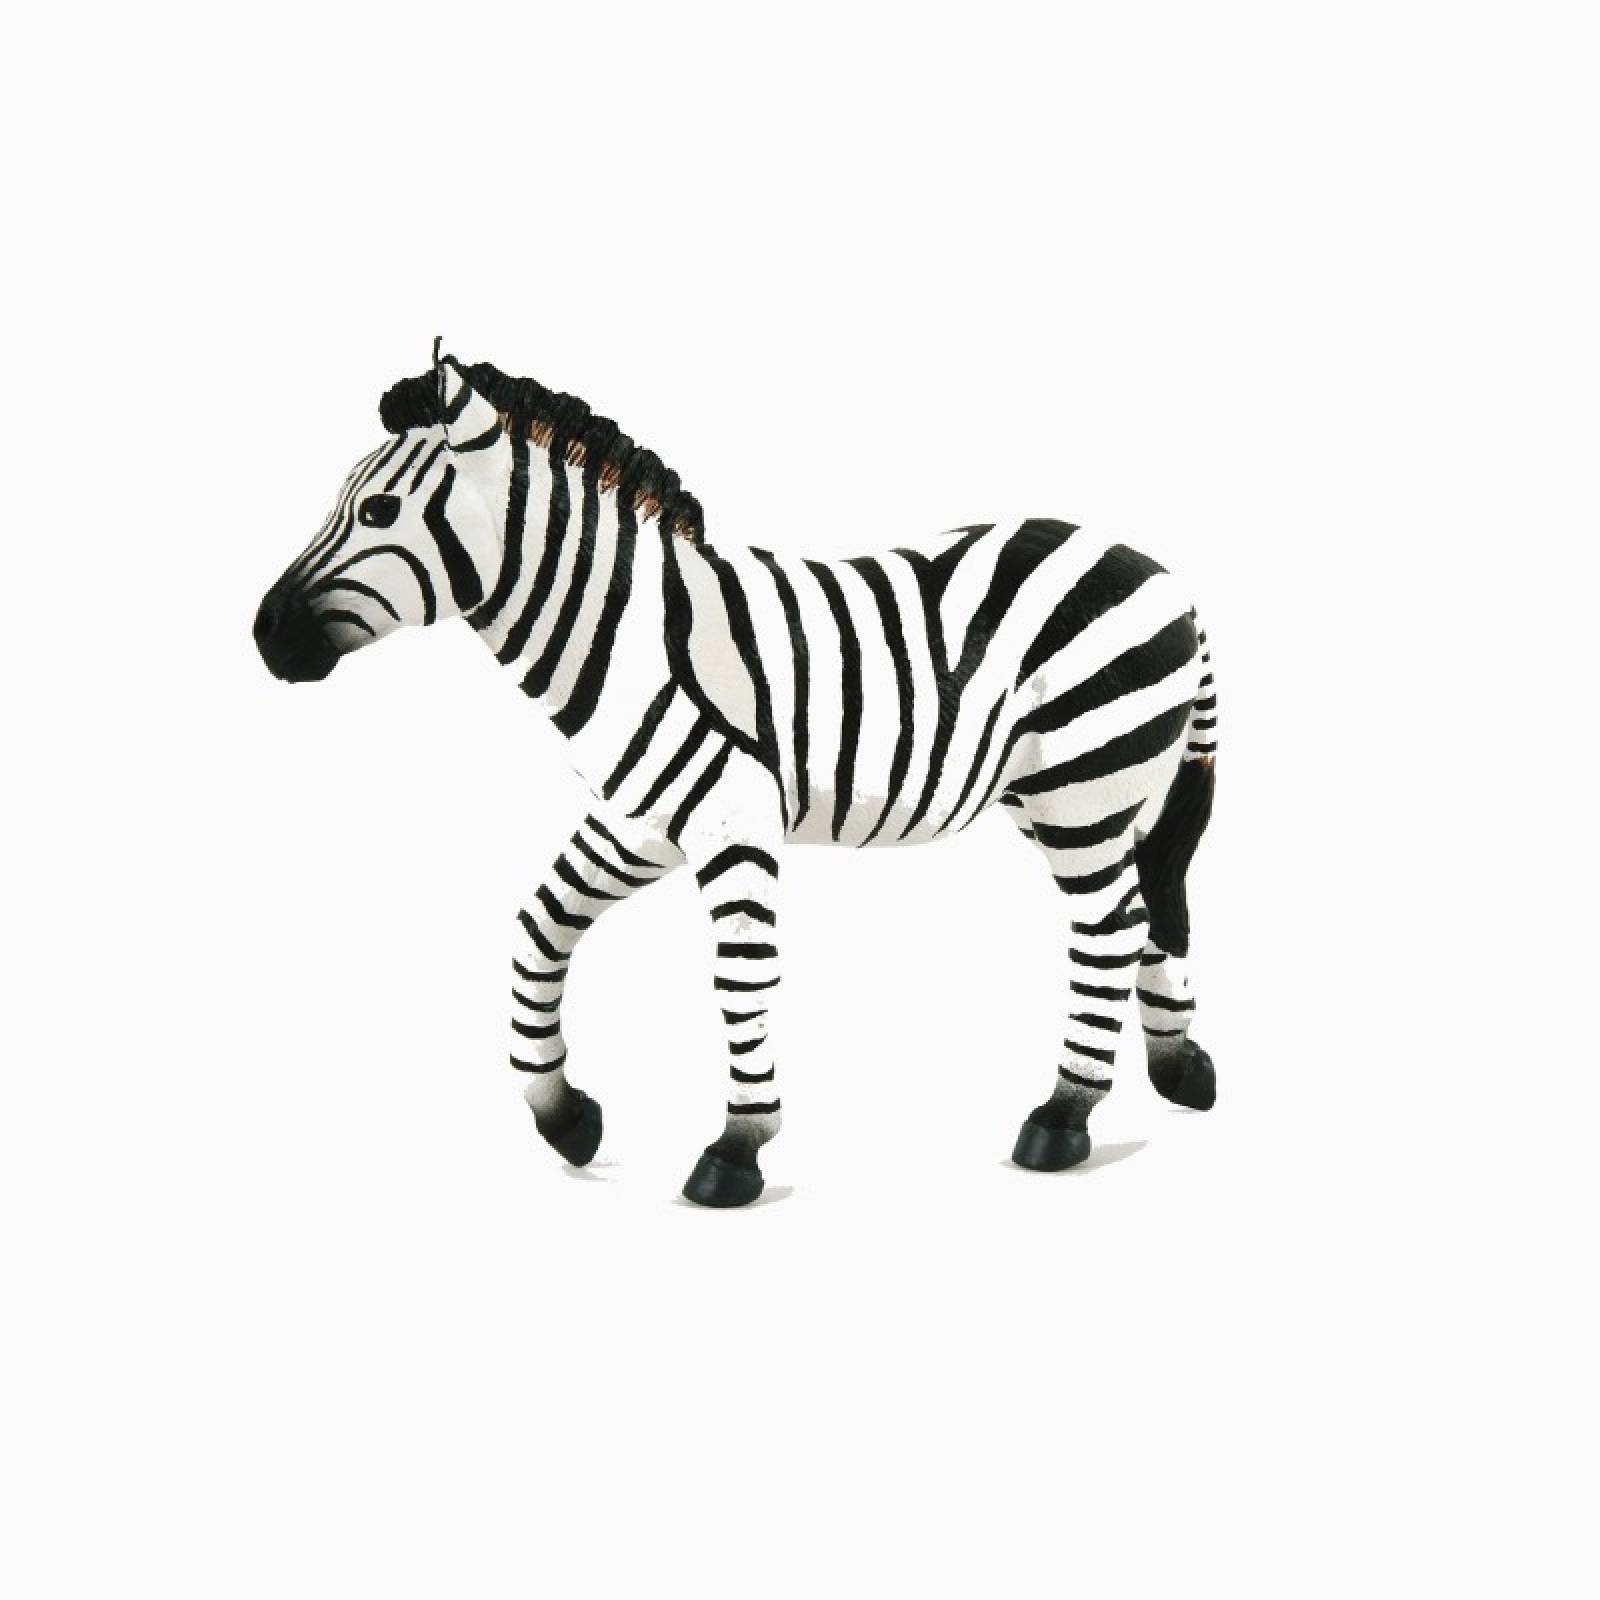 Male Zebra - Papo Wild Animal Figure